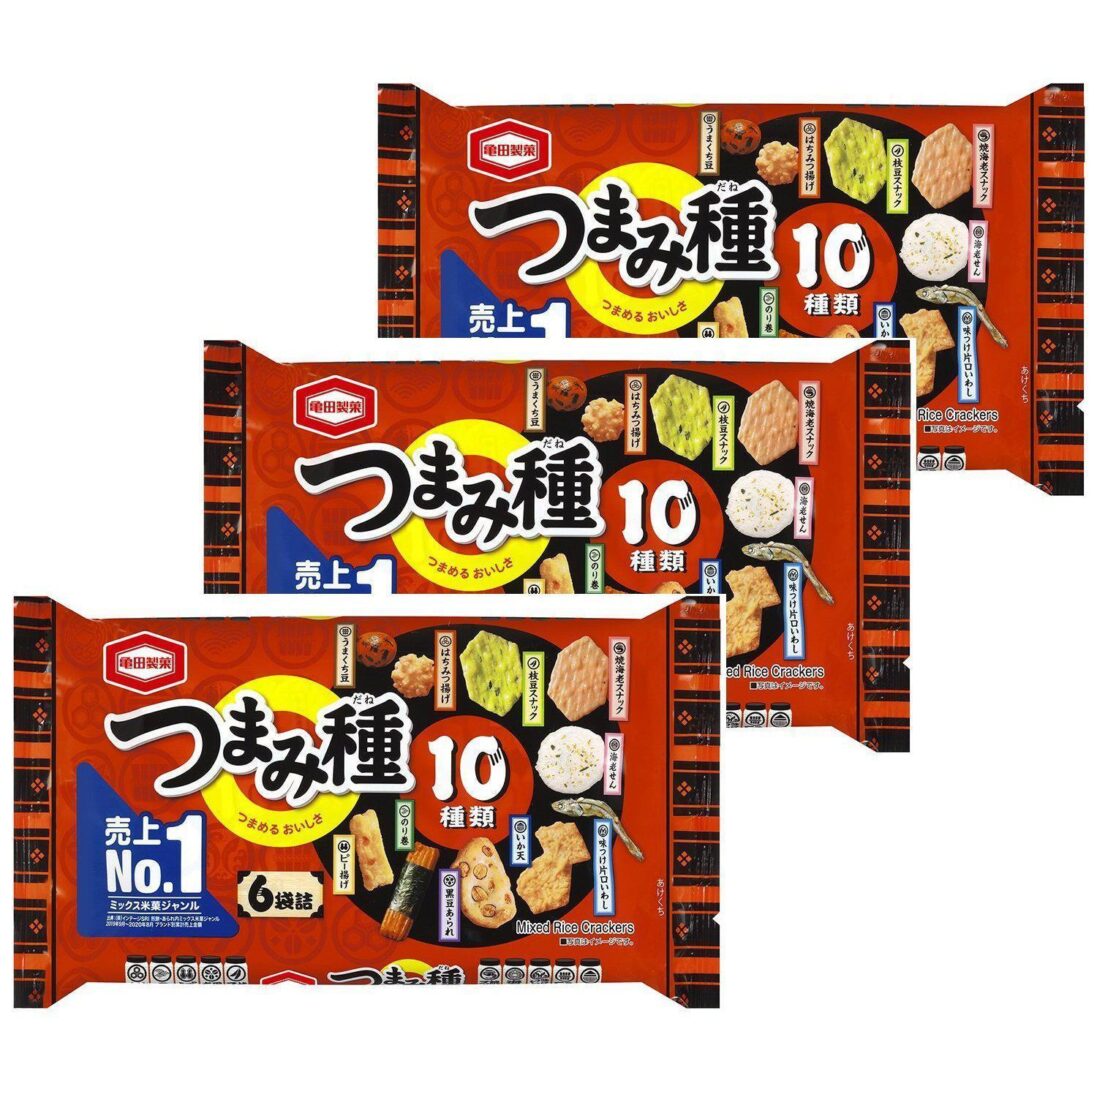 Kameda Tsumami Dane Senbei Cracker Assortment 120g (Pack of 3)